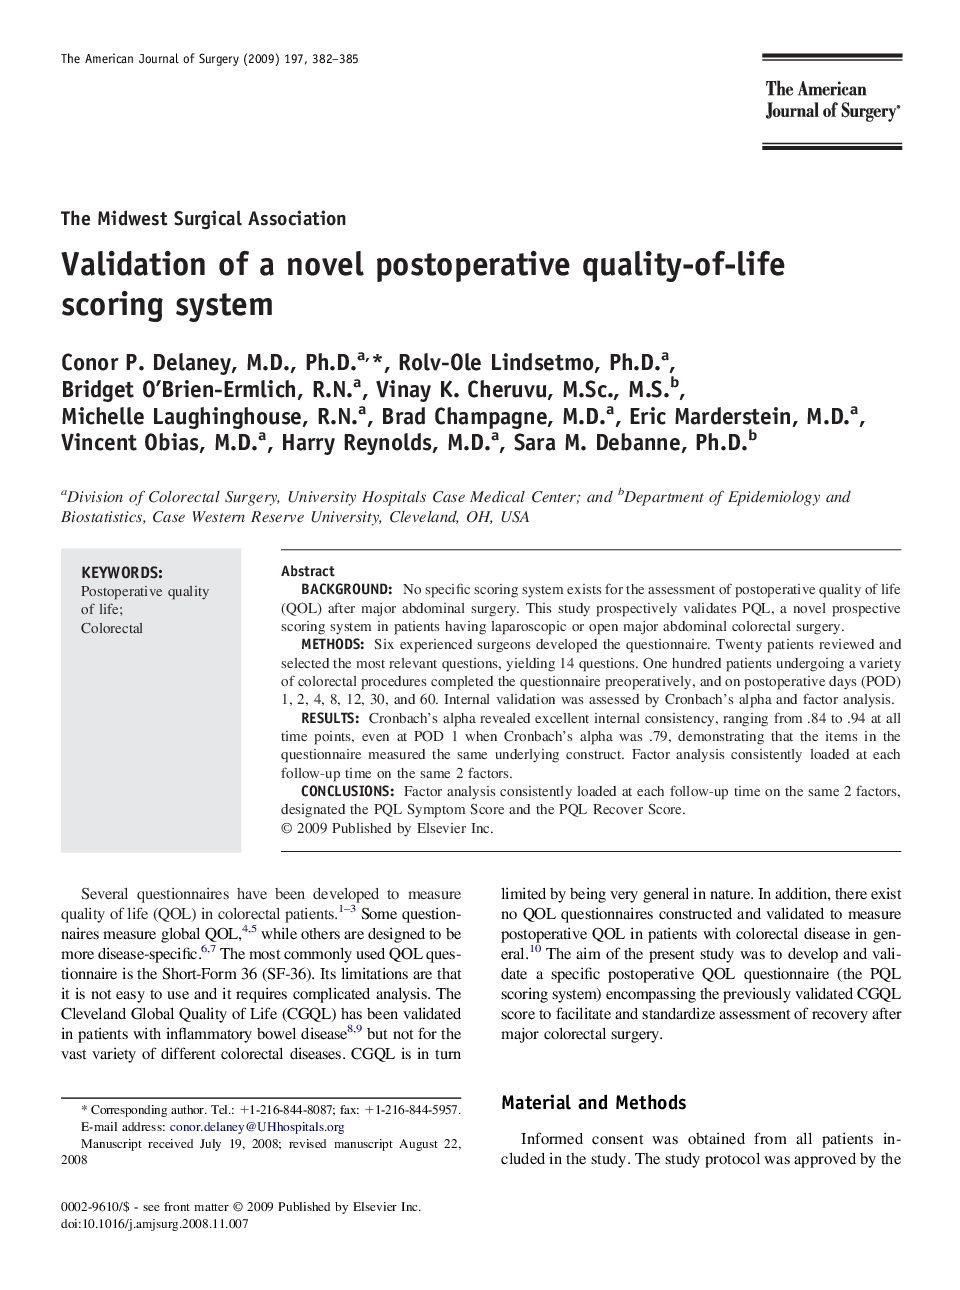 Validation of a novel postoperative quality-of-life scoring system